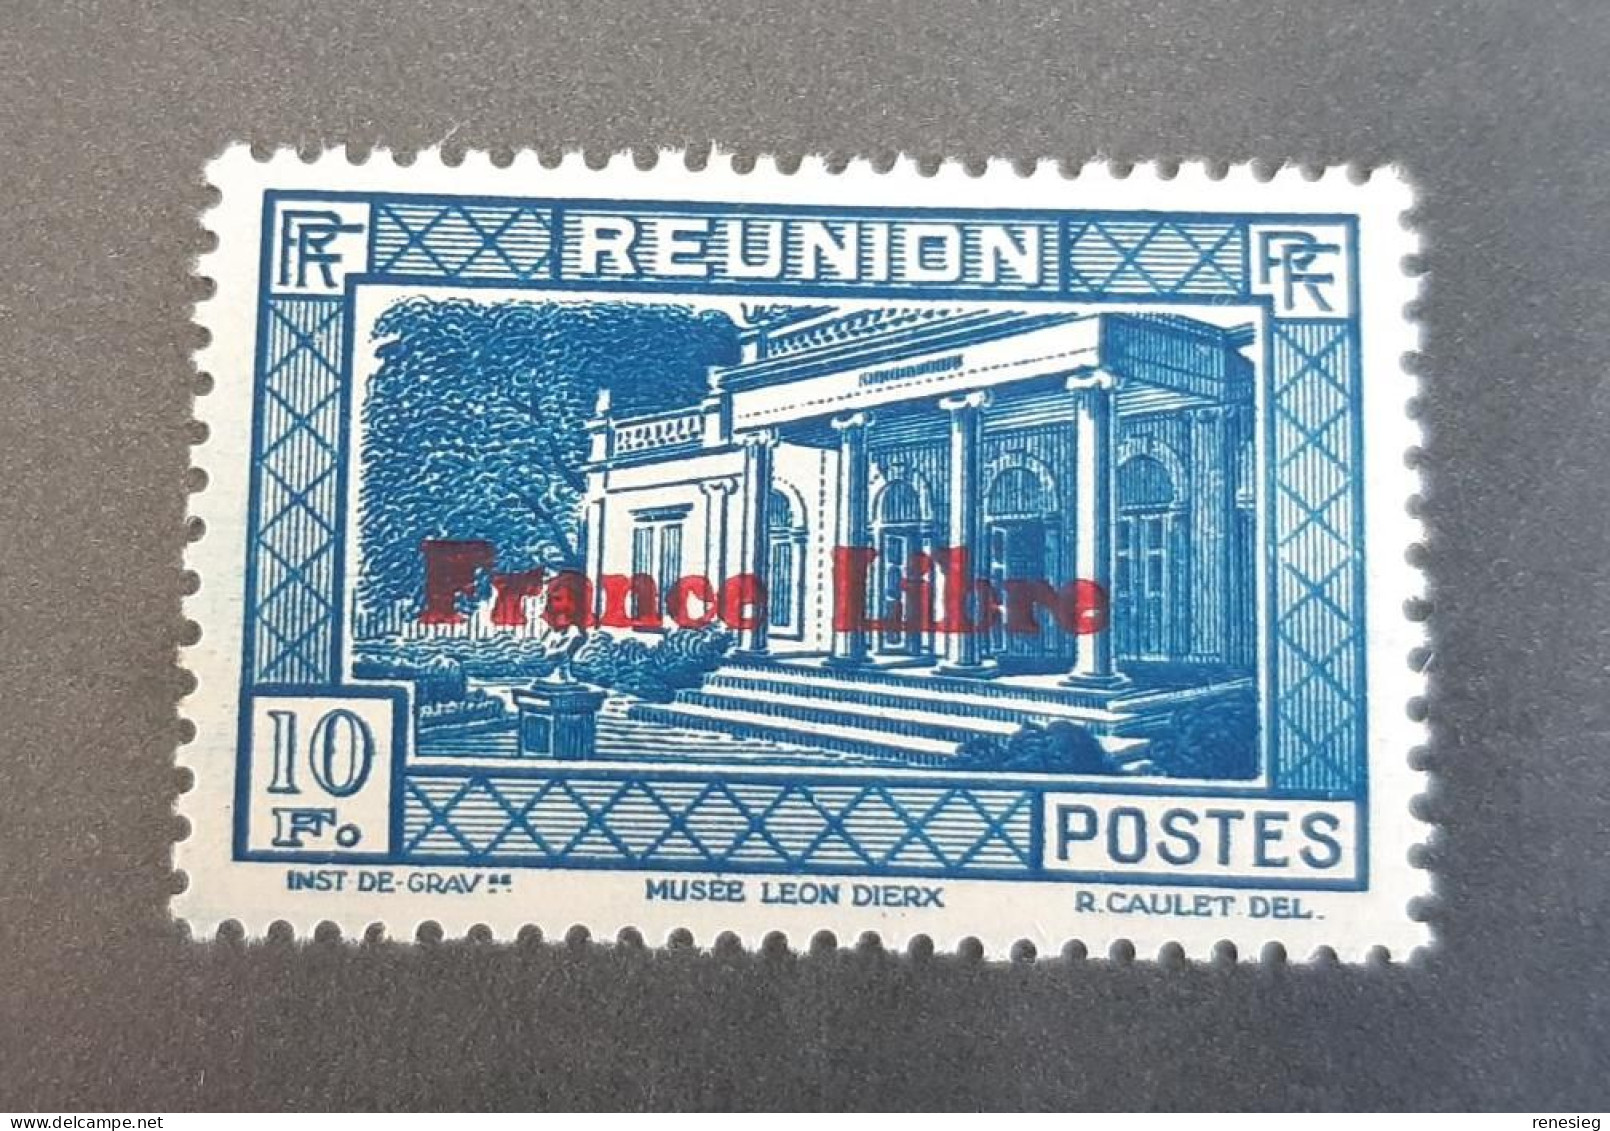 Réunion 1943 France Libre Yvert 214 MNH - Ungebraucht